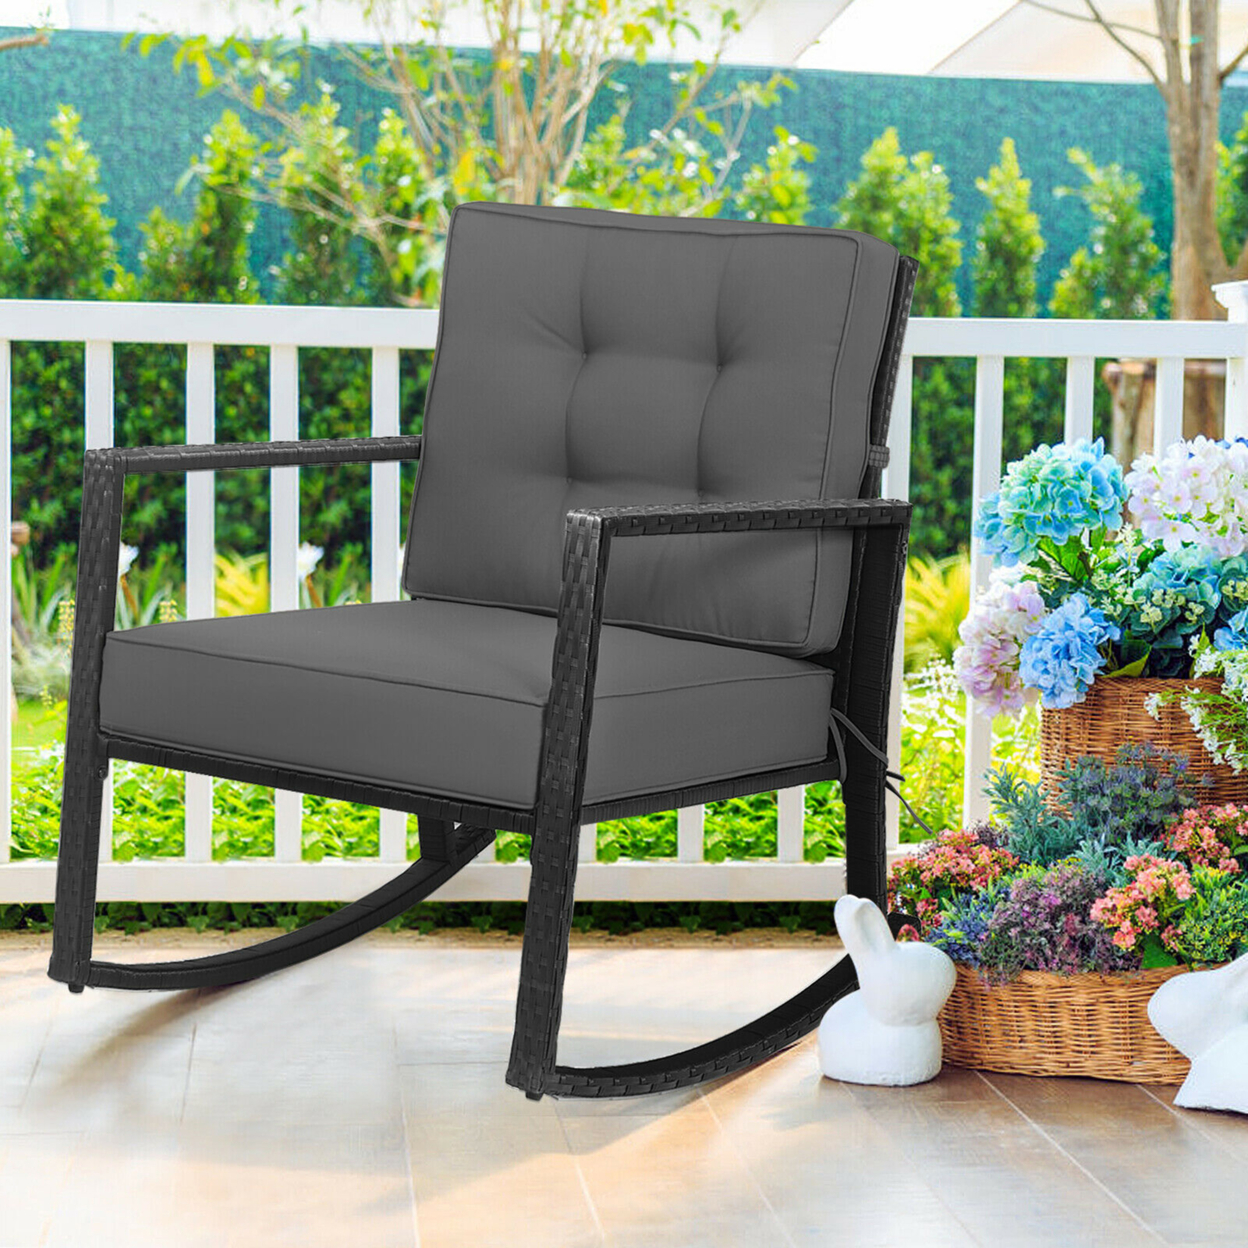 Outdoor Wicker Rocking Chair Patio Lawn Rattan Single Chair Glider W/ Grey Cushion